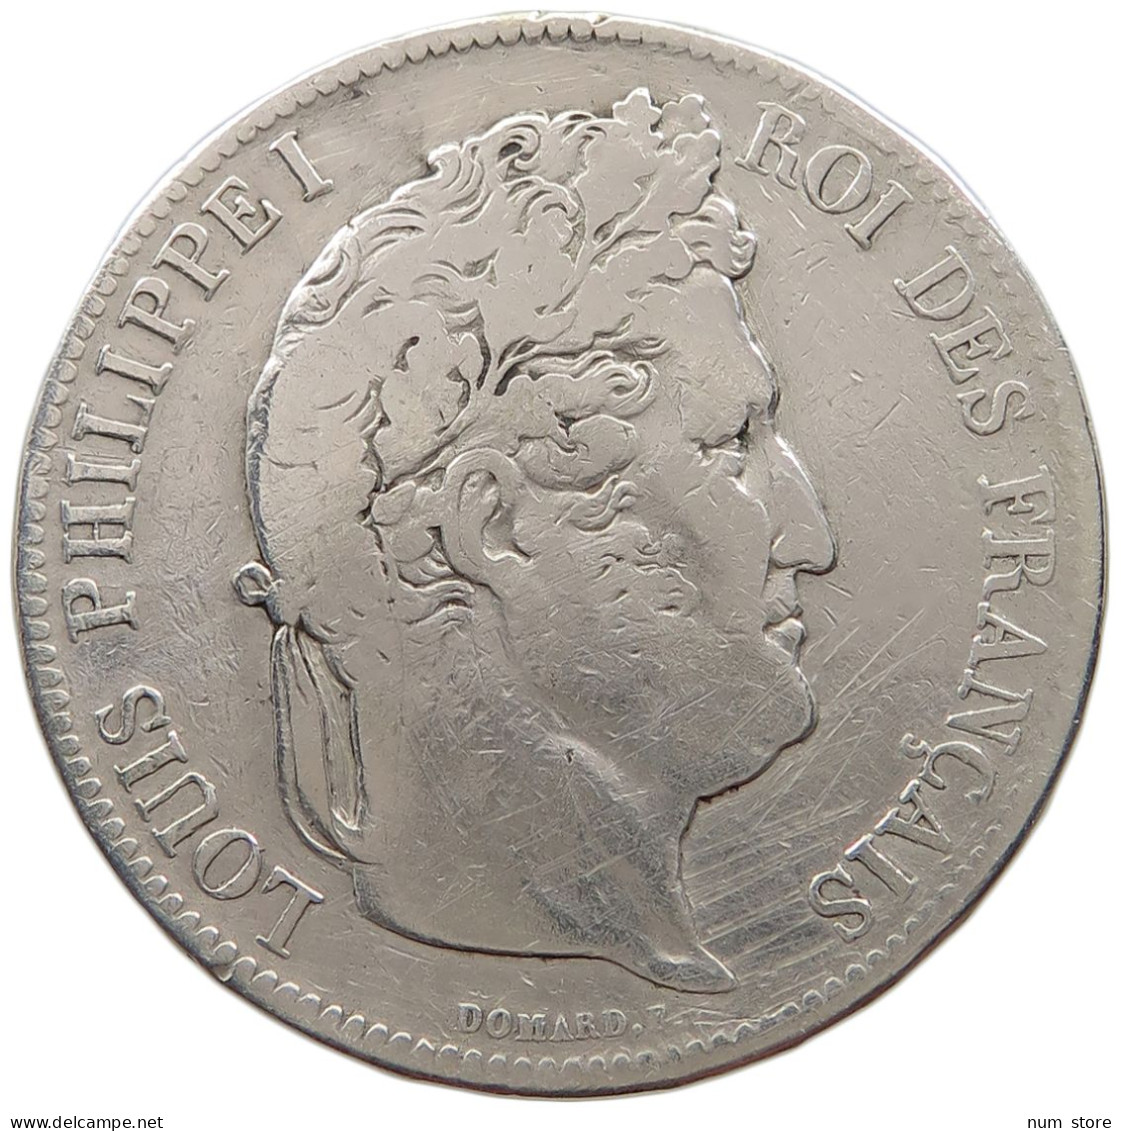 FRANCE 5 FRANCS 1837 W LOUIS PHILIPPE I. (1830-1848) #a001 0117 - 5 Francs